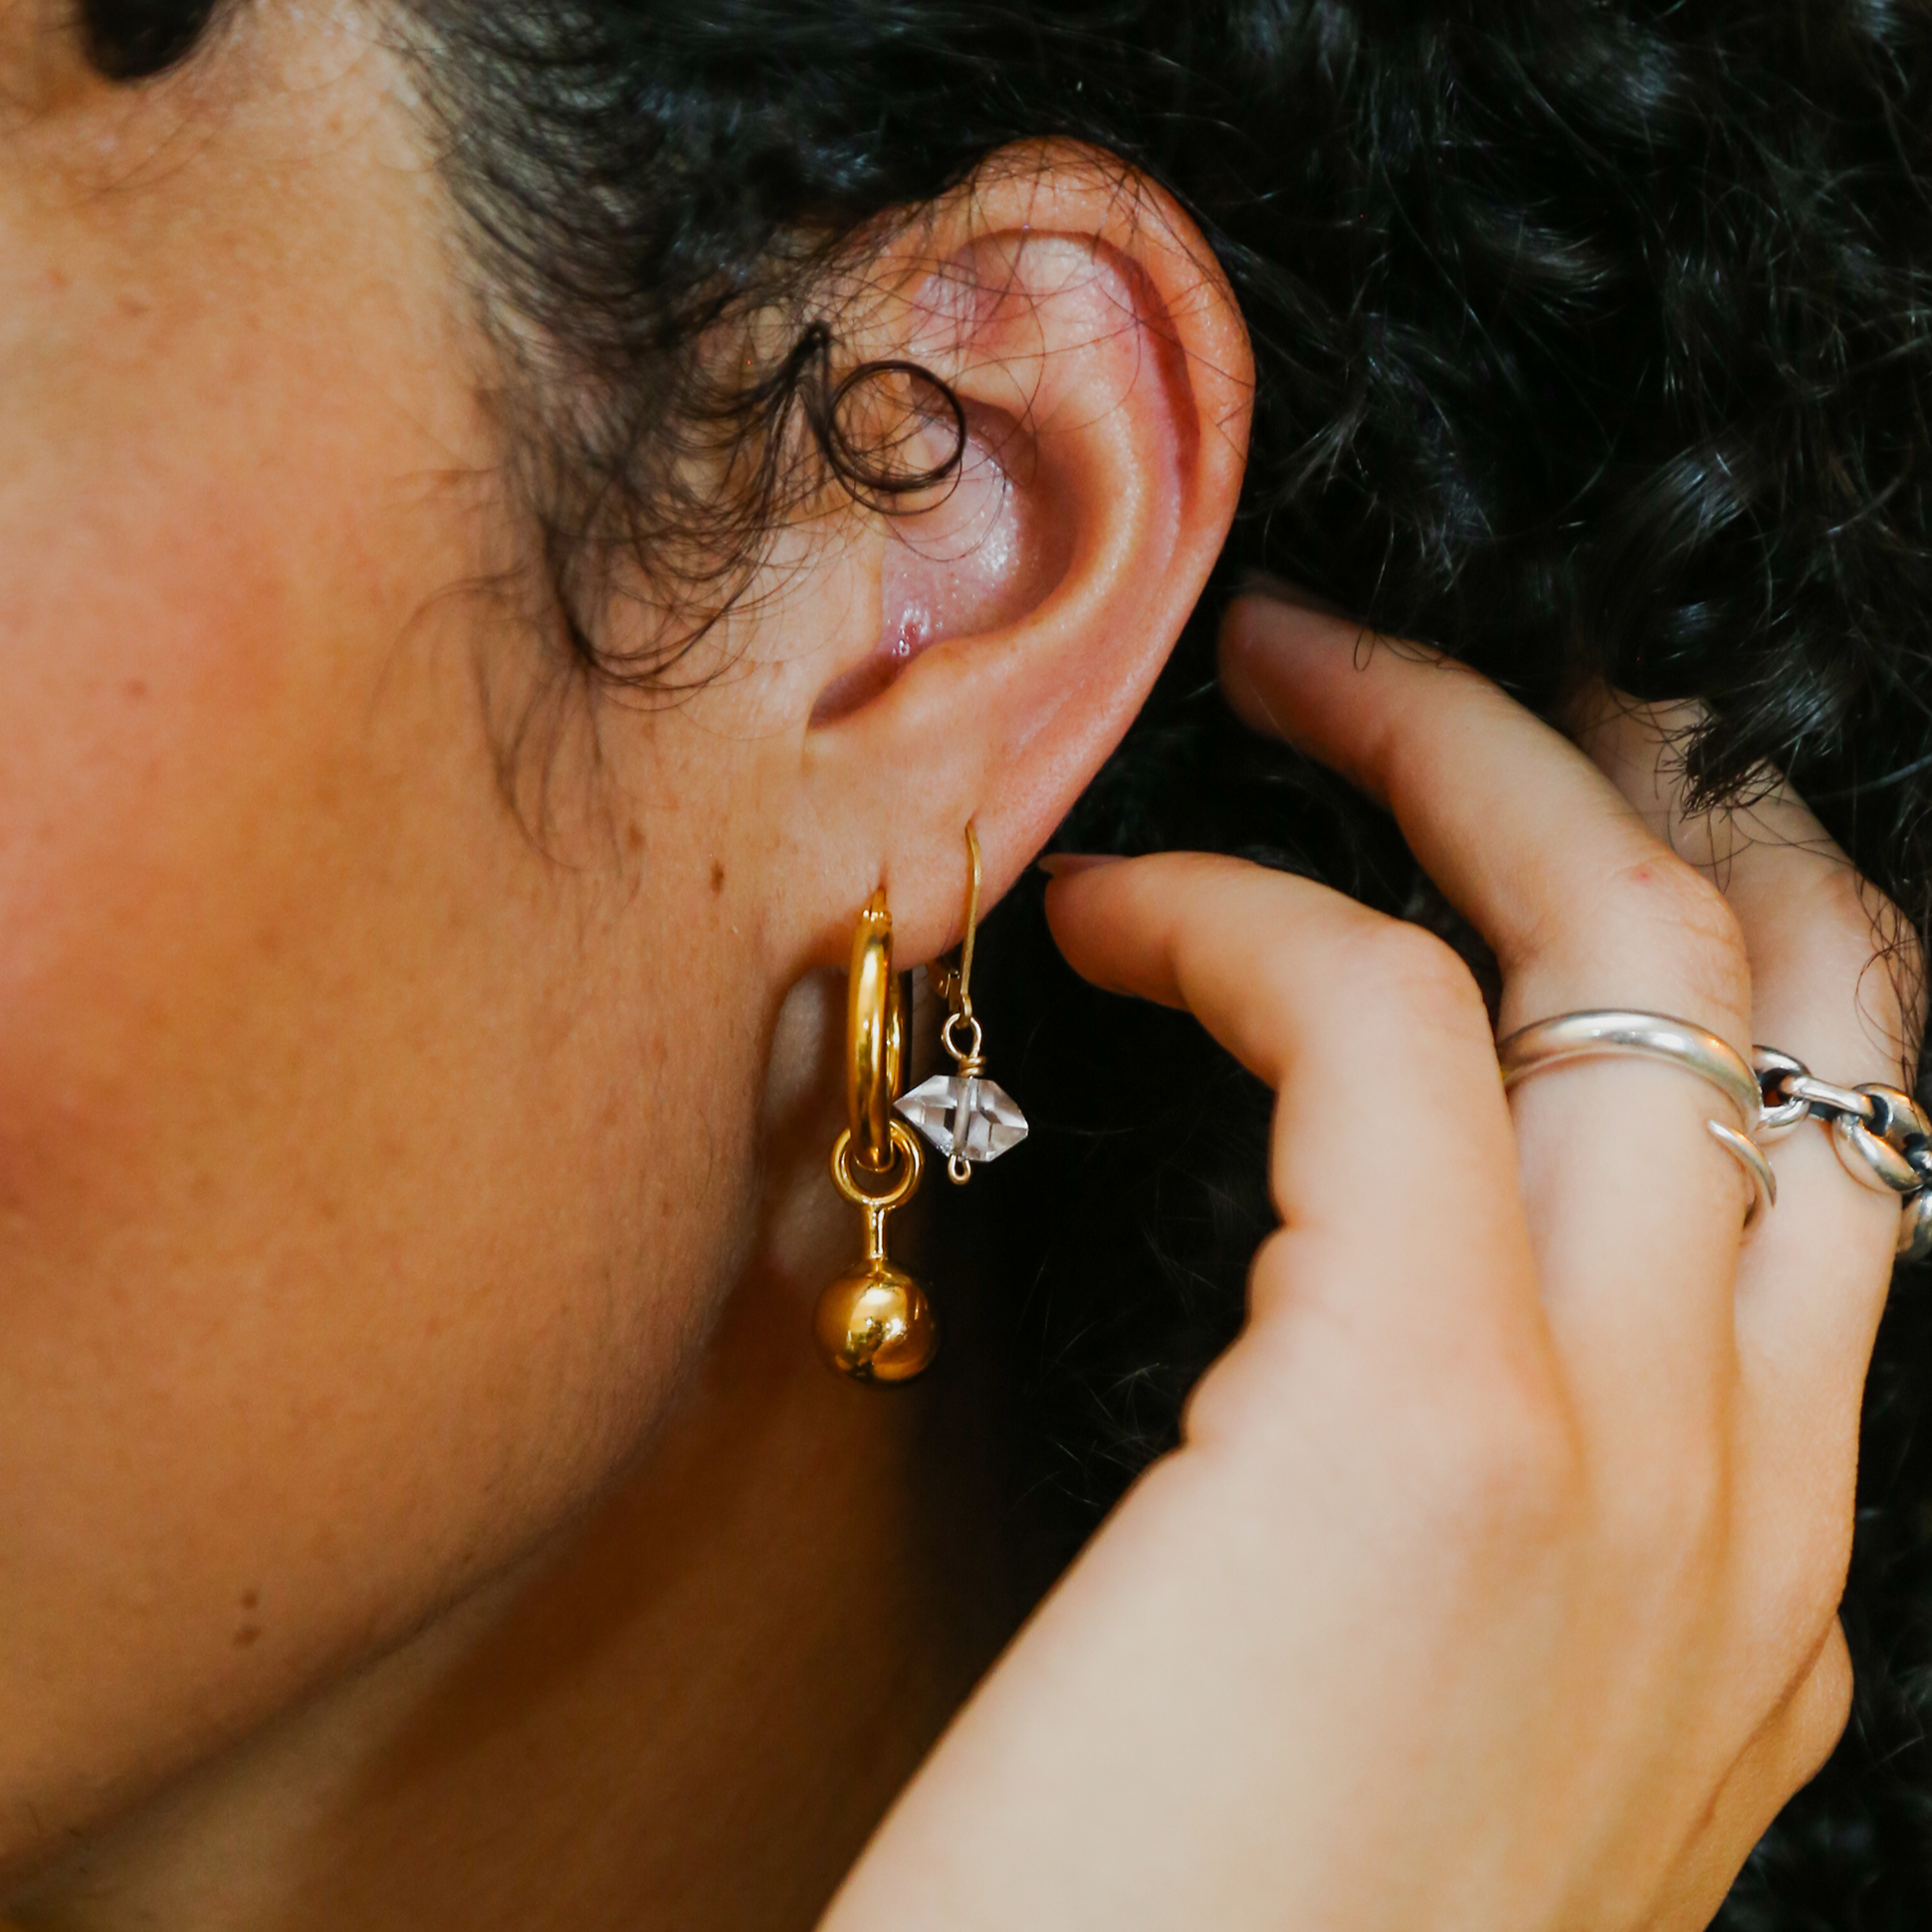 Thea Herkimer Gold Earrings